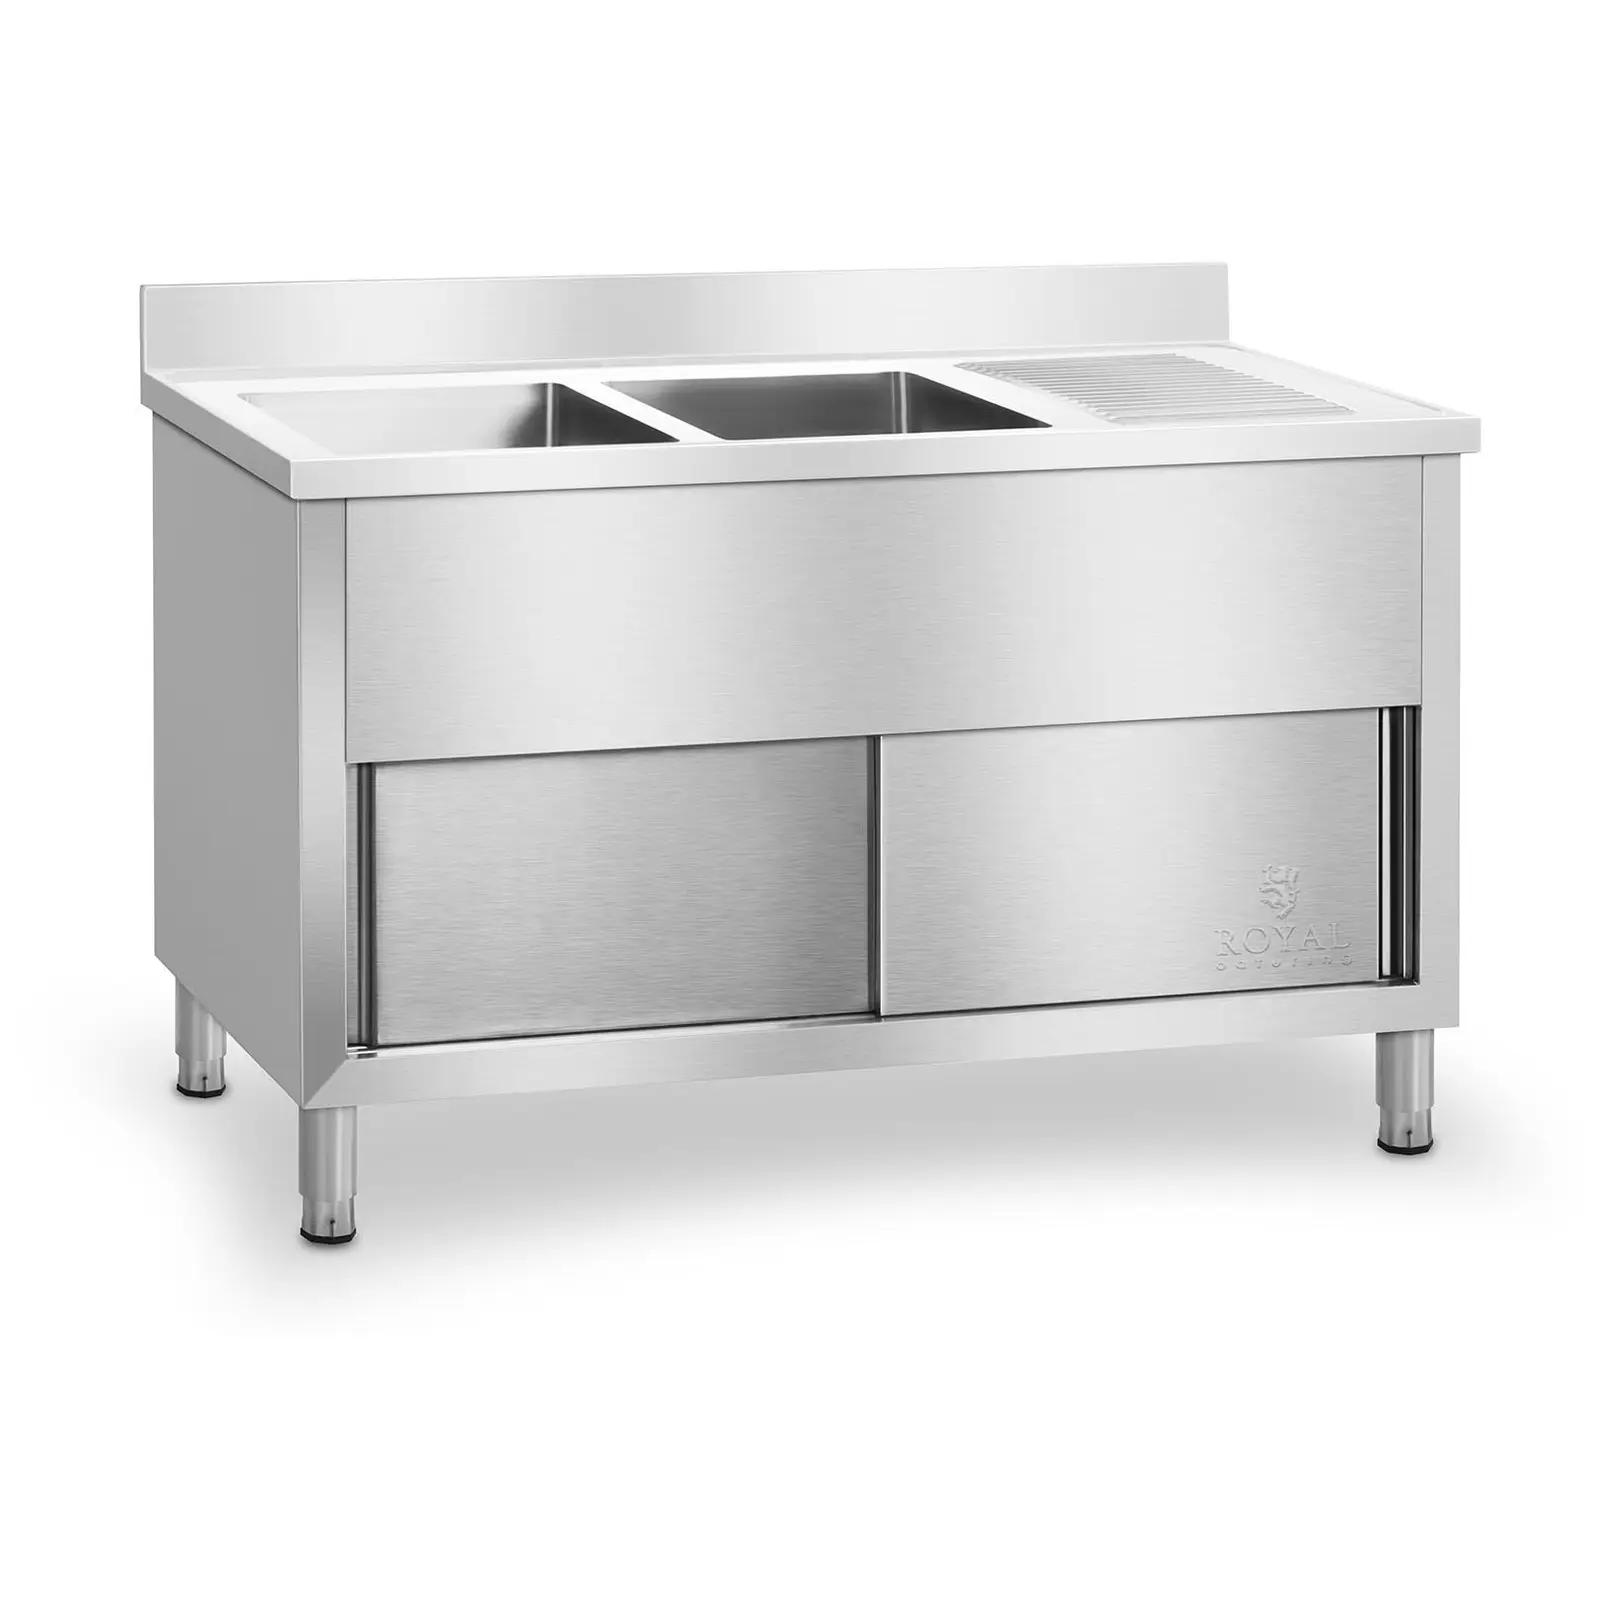 Double Sink Cabinet - 140 cm